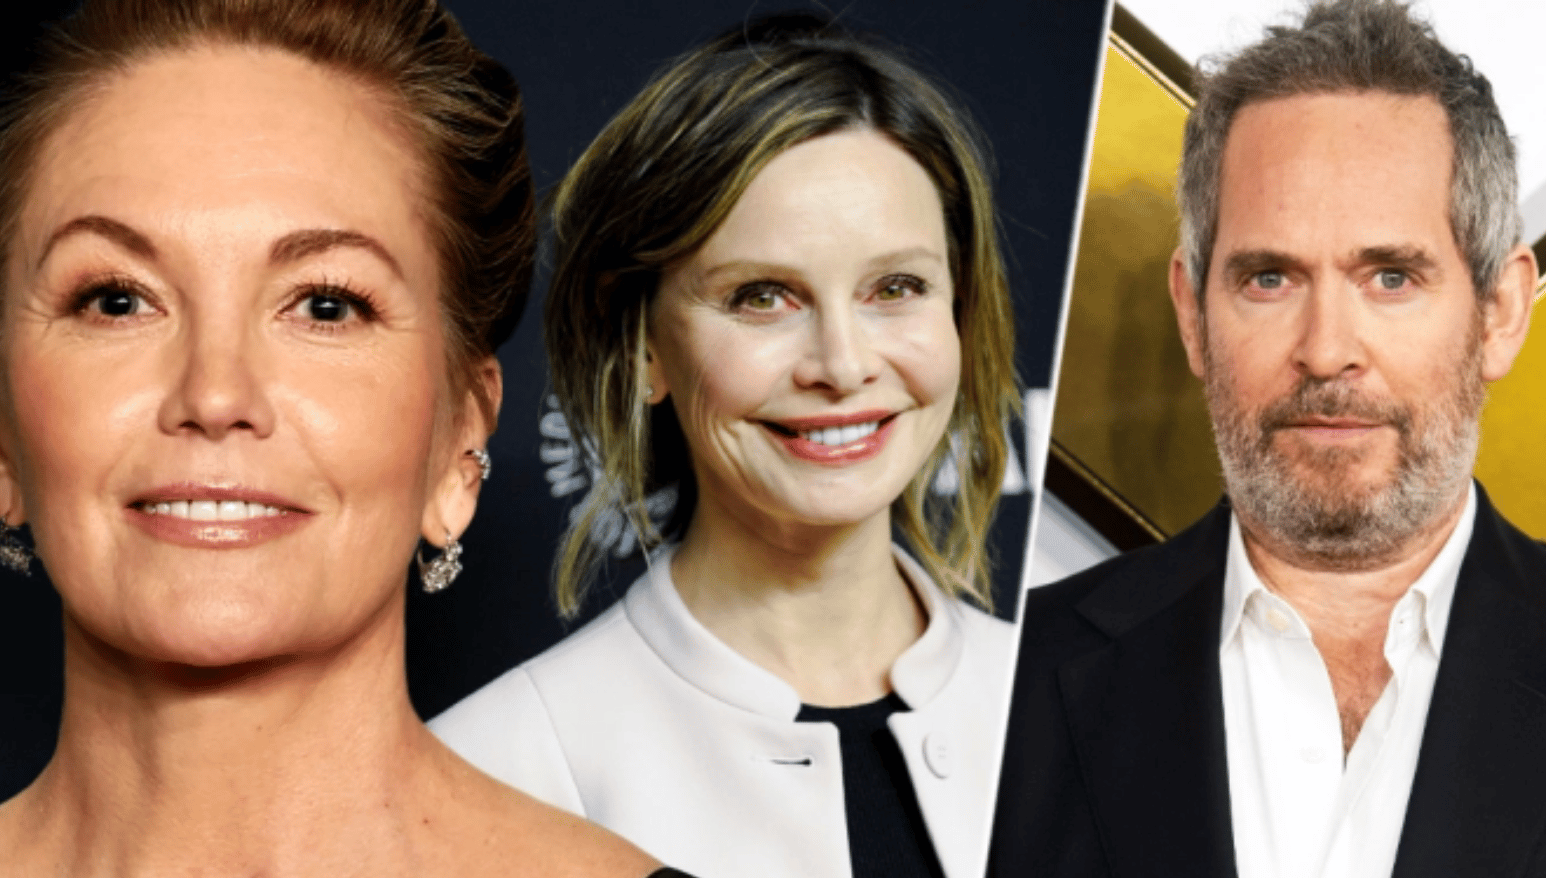 Tom Hollander, Calista Flockhart & Diane Lane To Star In Season 2 Of Ryan Murphy’s FX Series “Feud”